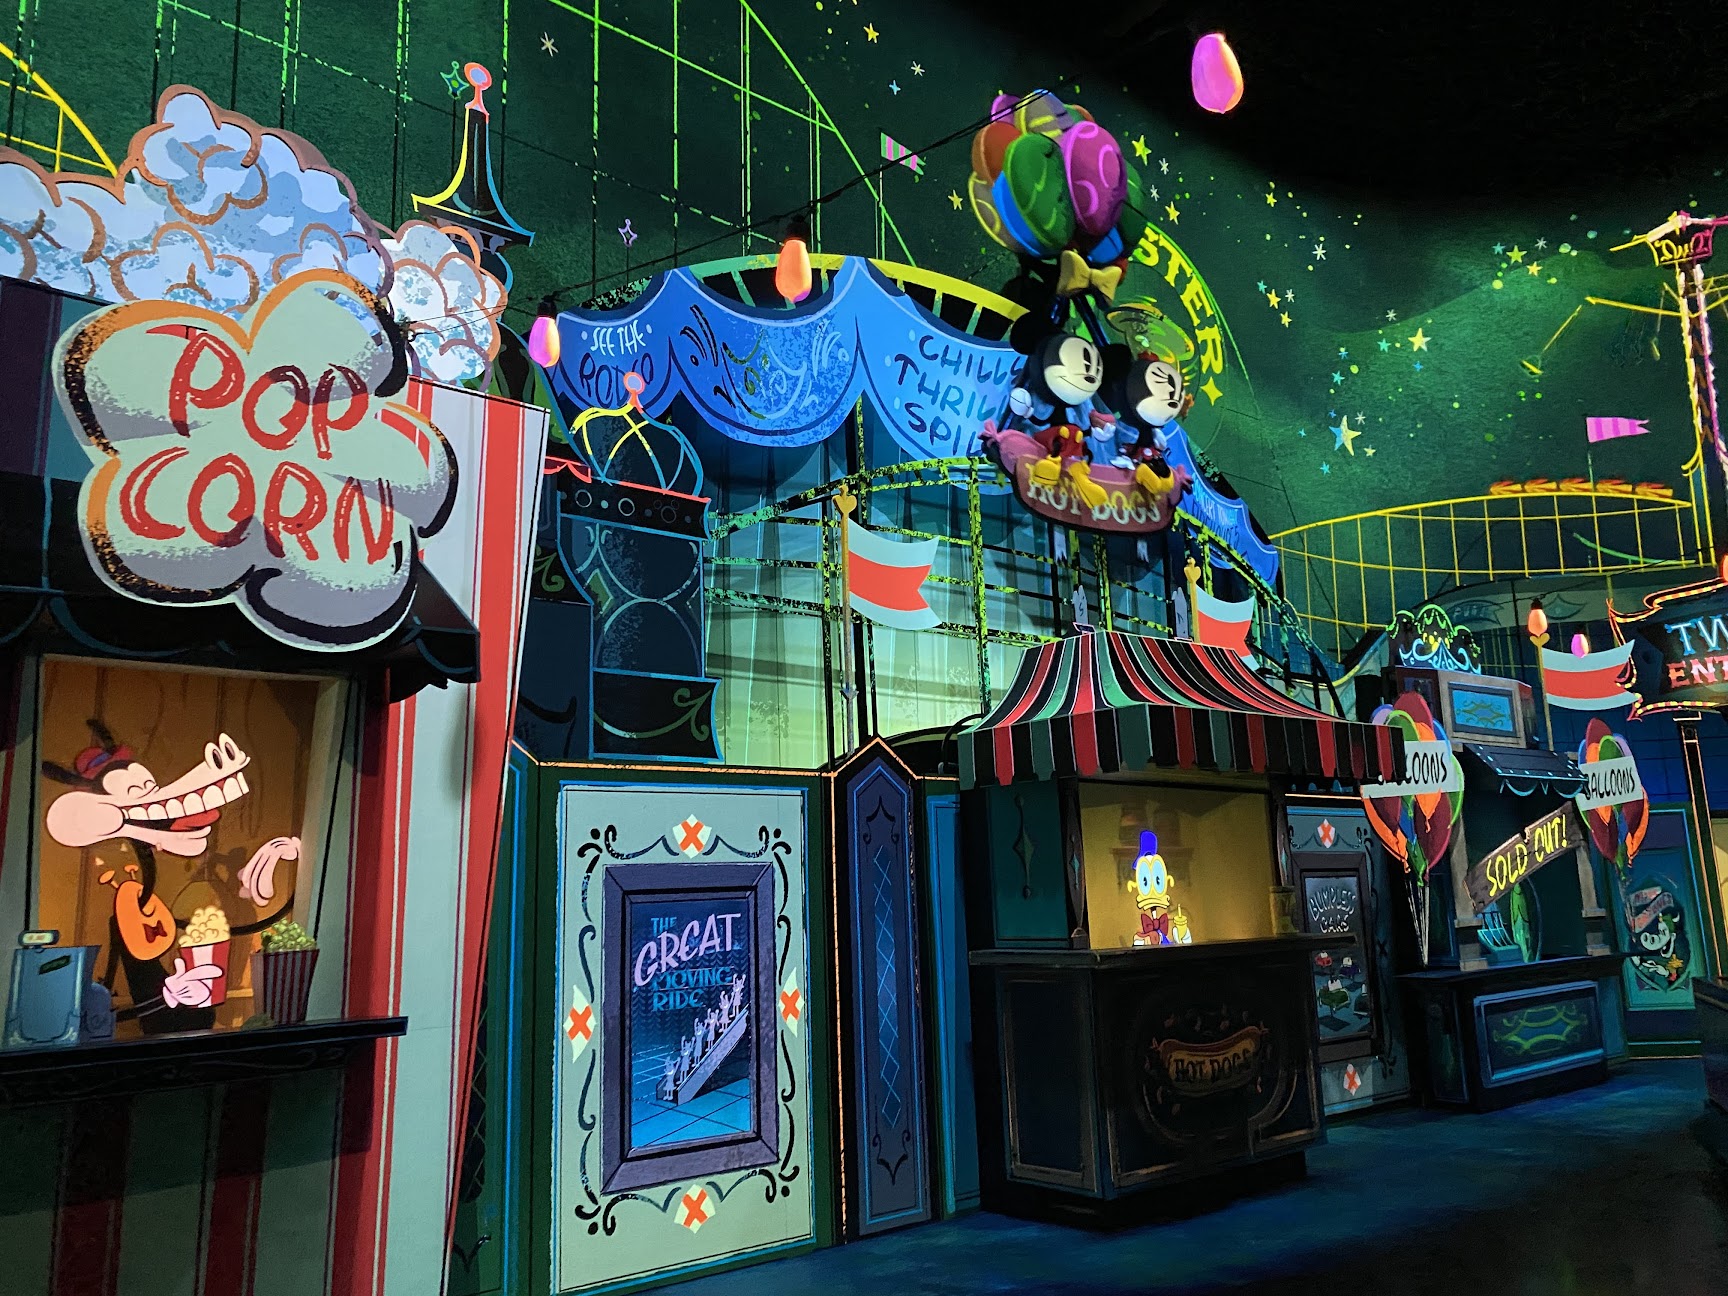 Mickey Minnie Runaway Railway Opens January 2023 At Disneyland Plus More Disney100 Celebration Details 1 